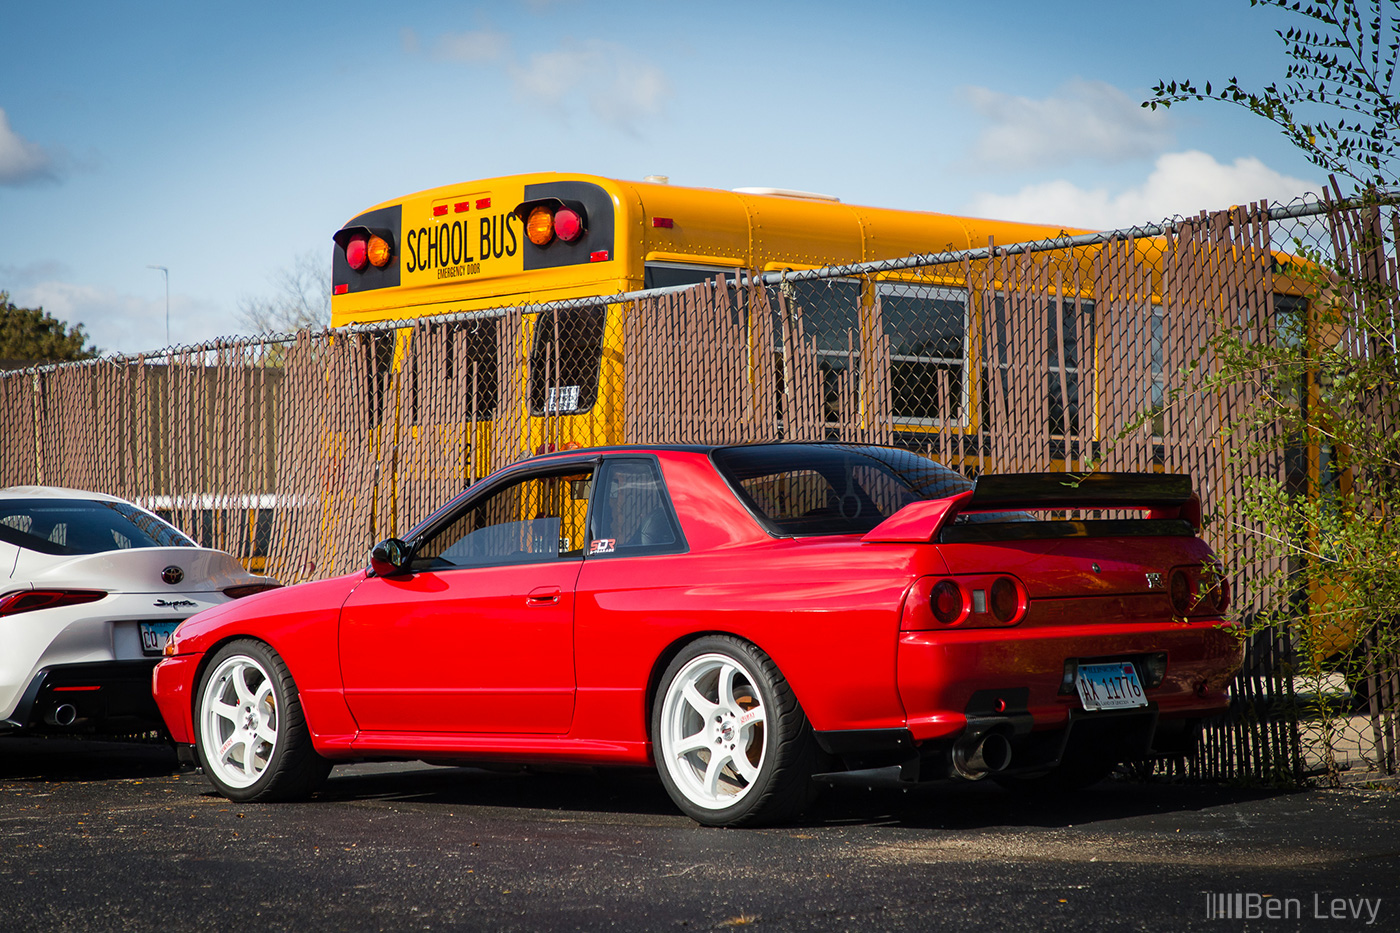 Red Nissan Skyline GT-R